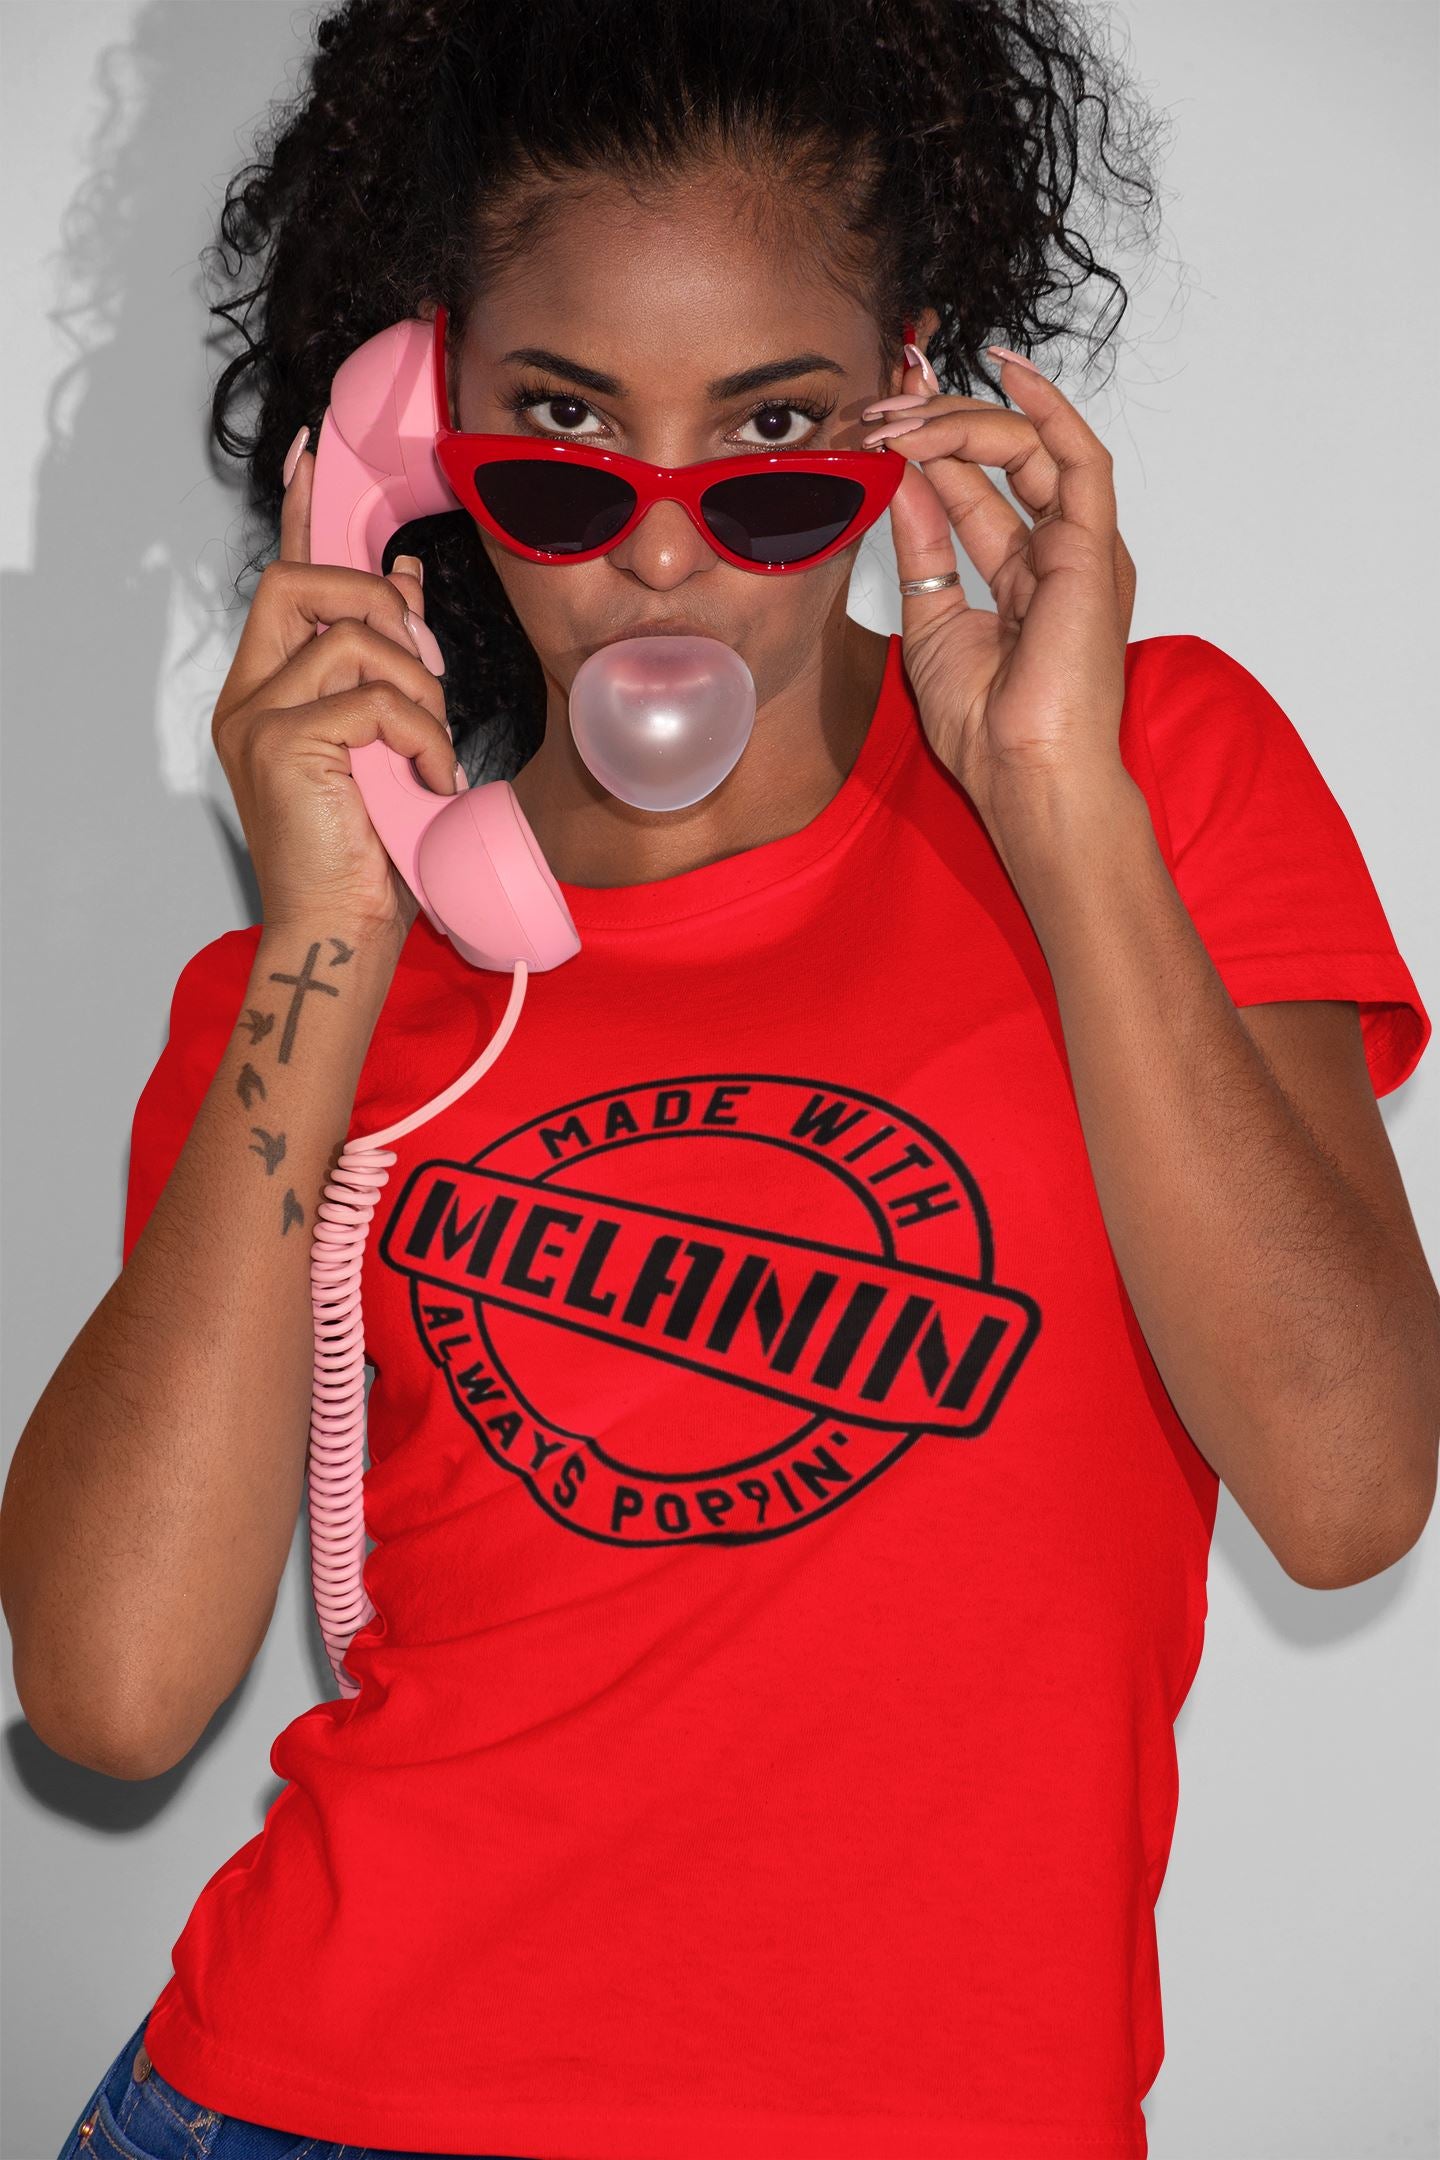 Made with Melanin, Always Poppin' T-Shirt Shirt B1ack By Design LLC 